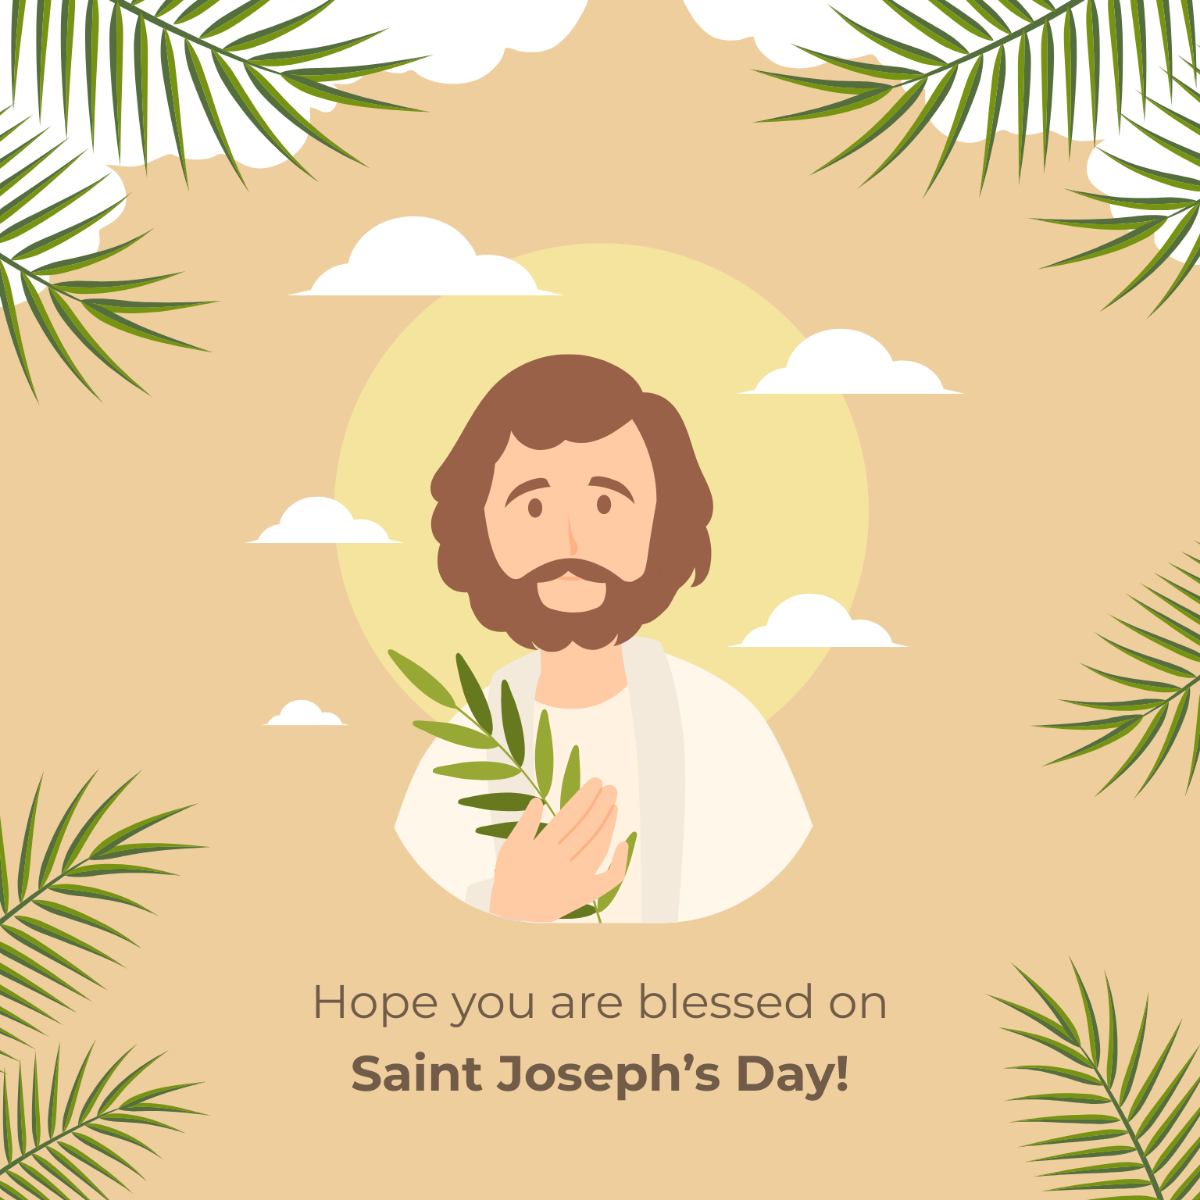 Saint Joseph's Day Greeting Card Vector Template